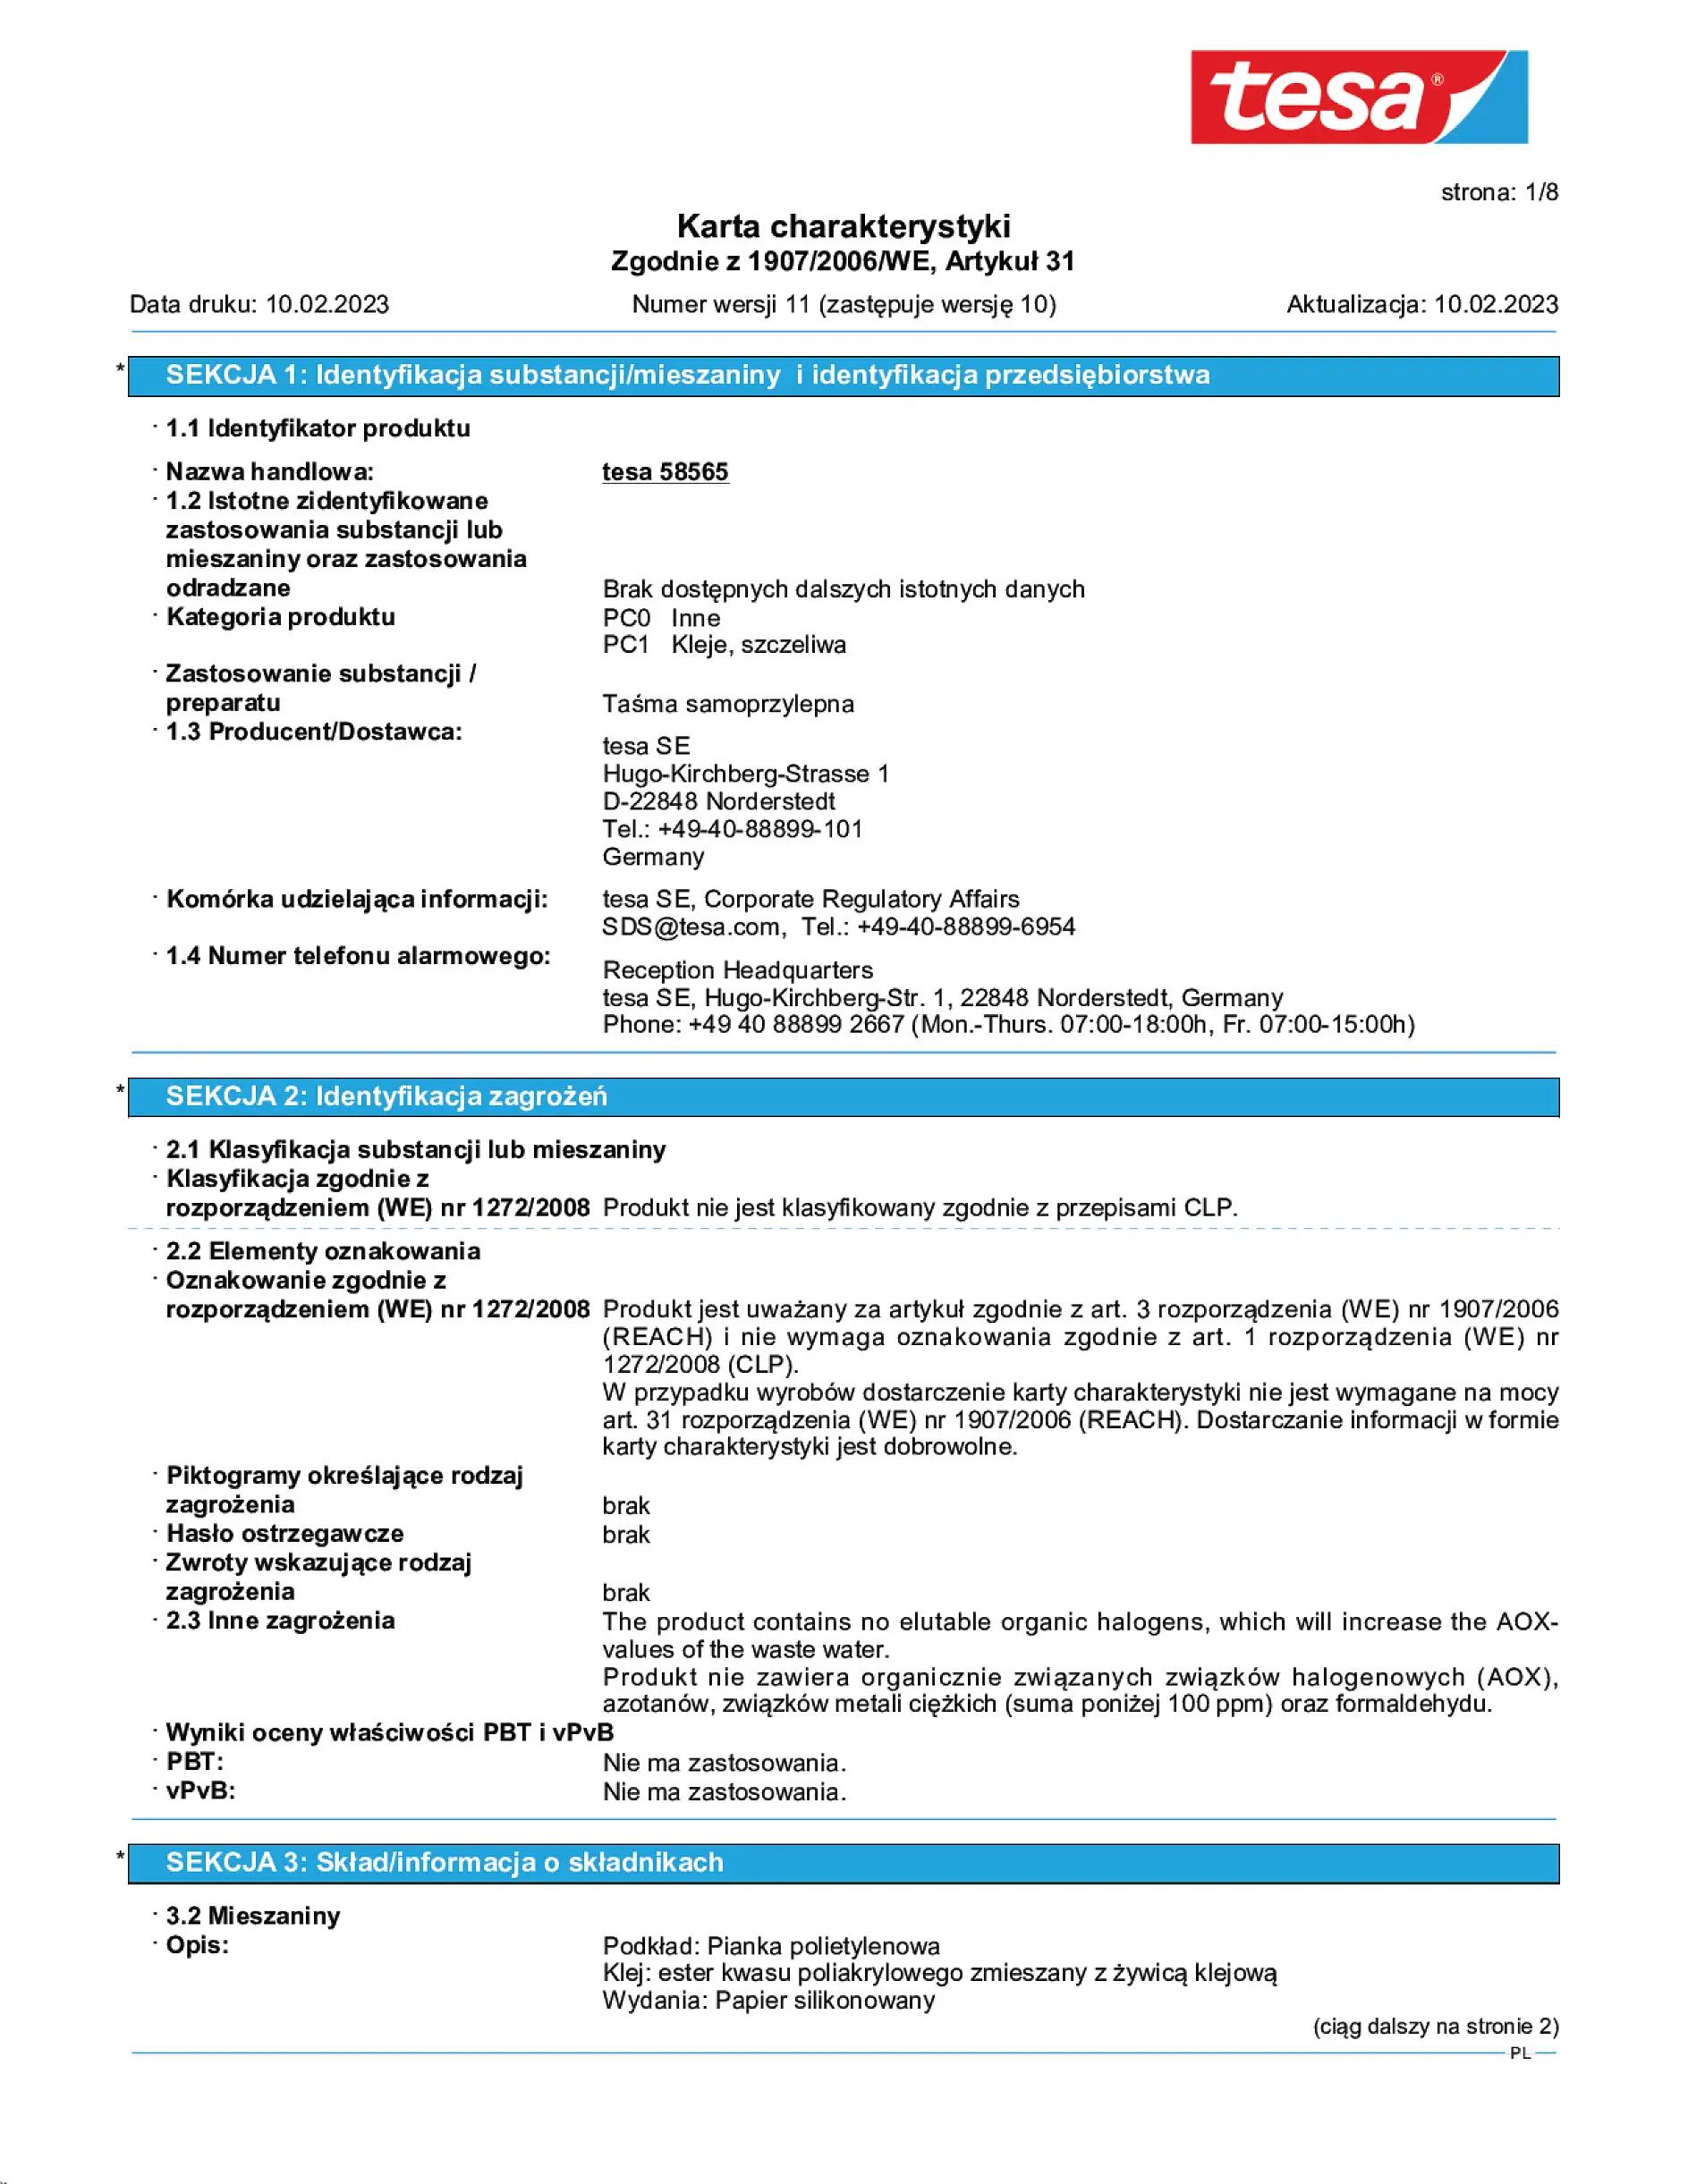 Safety data sheet_tesa® Powerbond 58565_pl-PL_v11